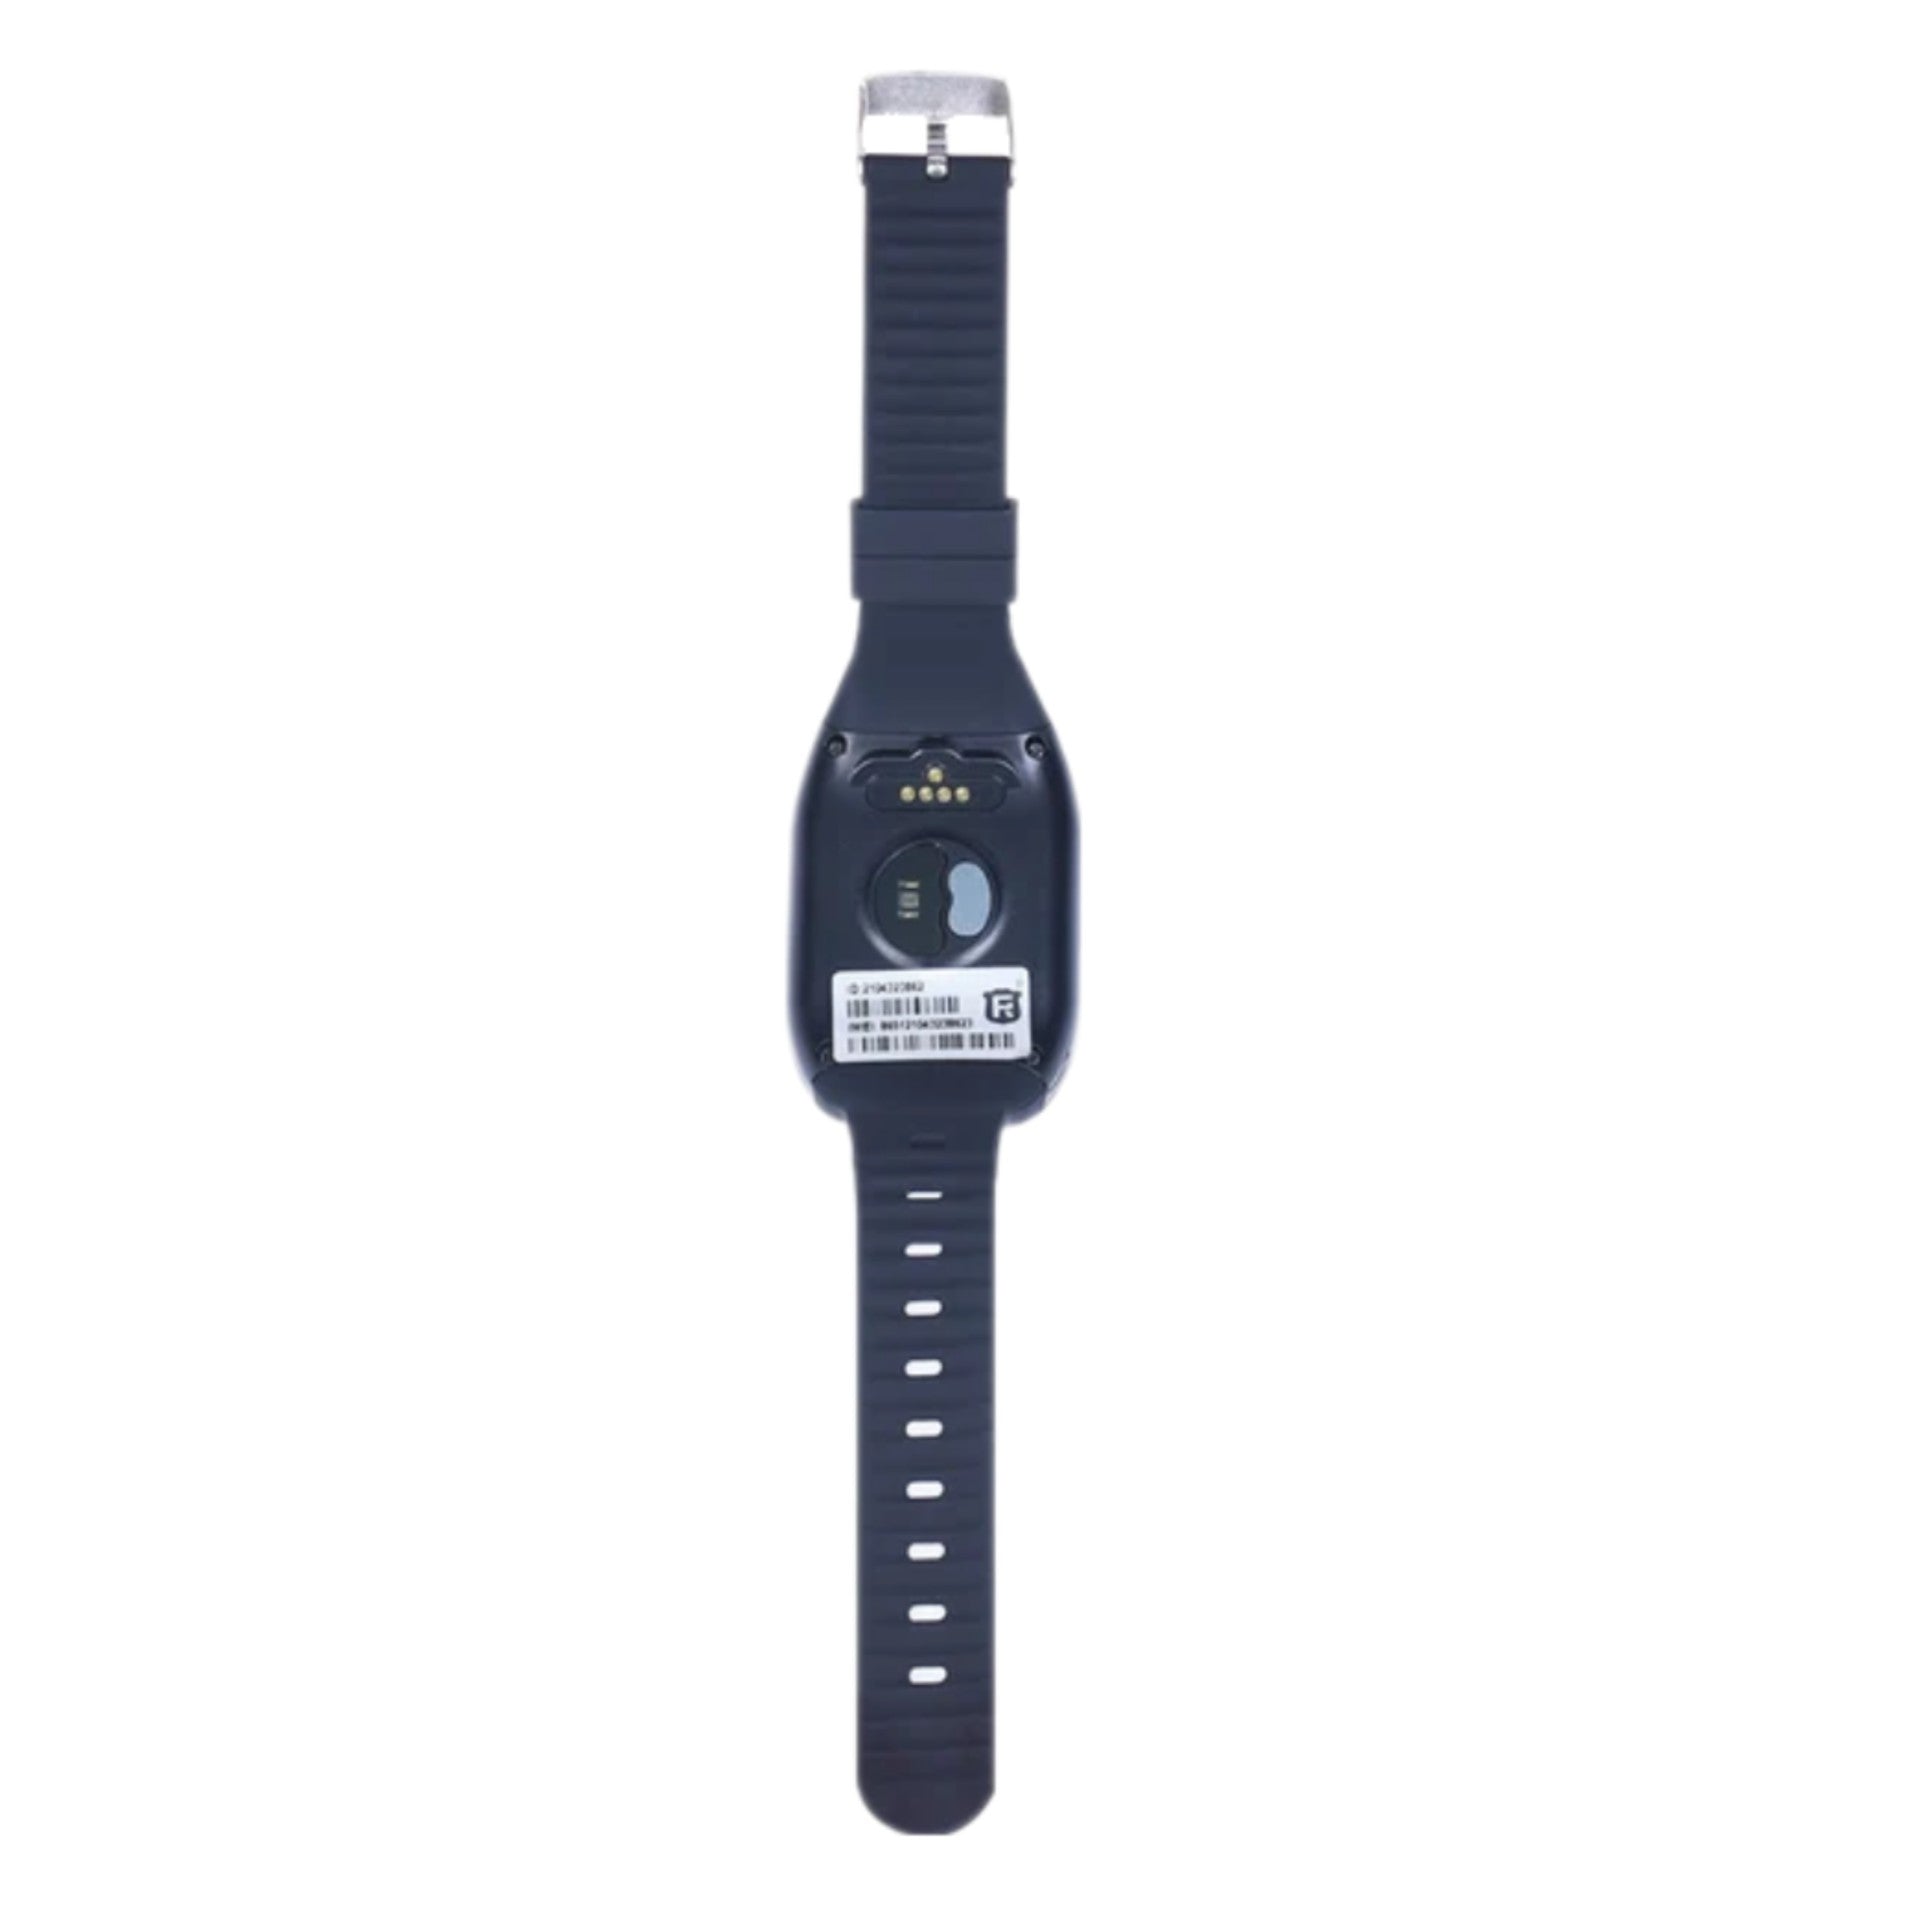 GPS Smartwatch WB62S senior